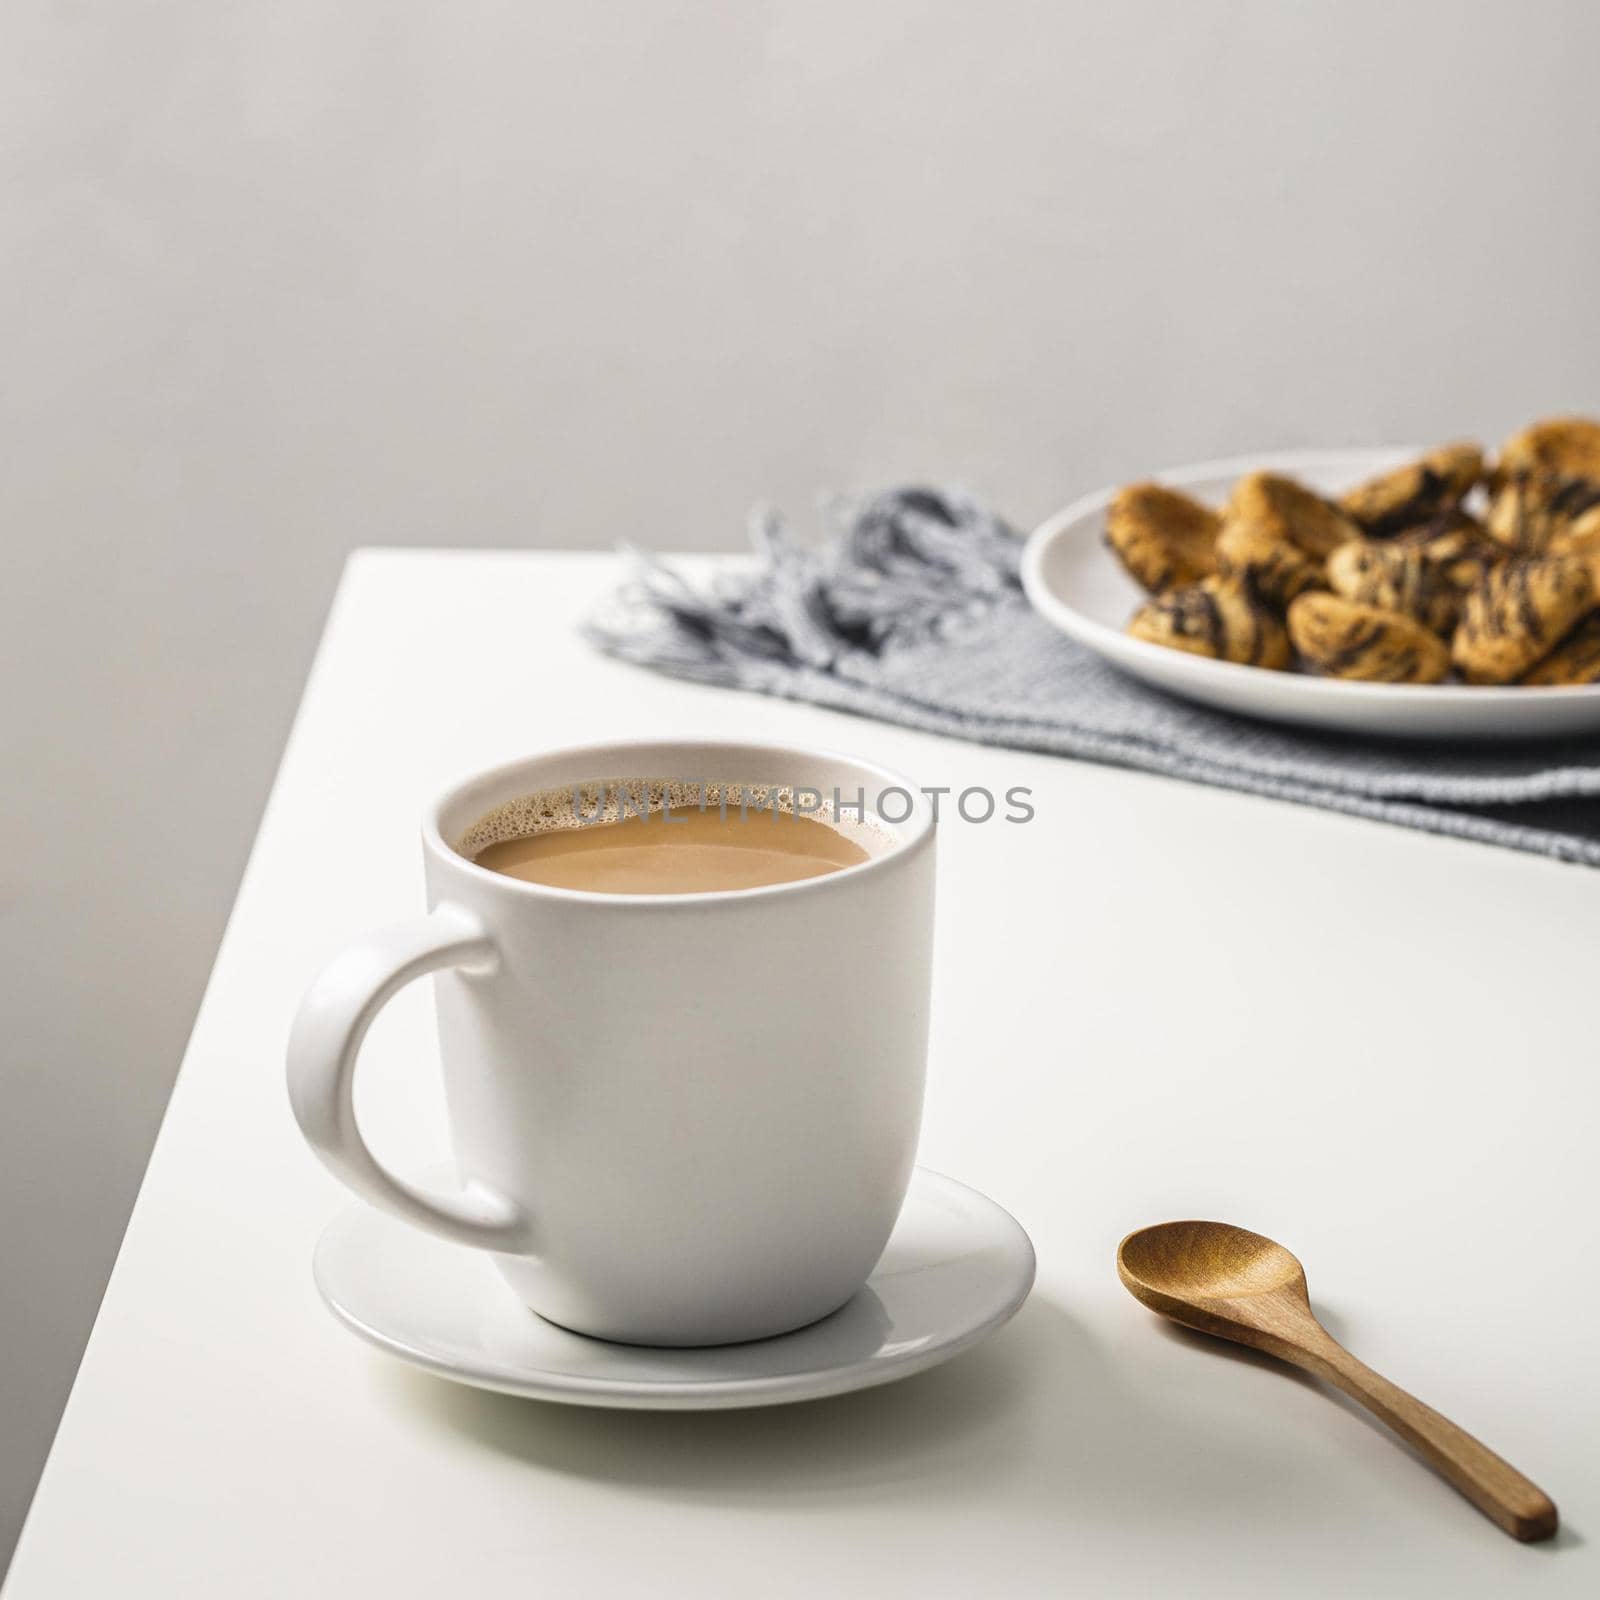 coffee mug table with cookies plate spoon. High quality beautiful photo concept by Zahard